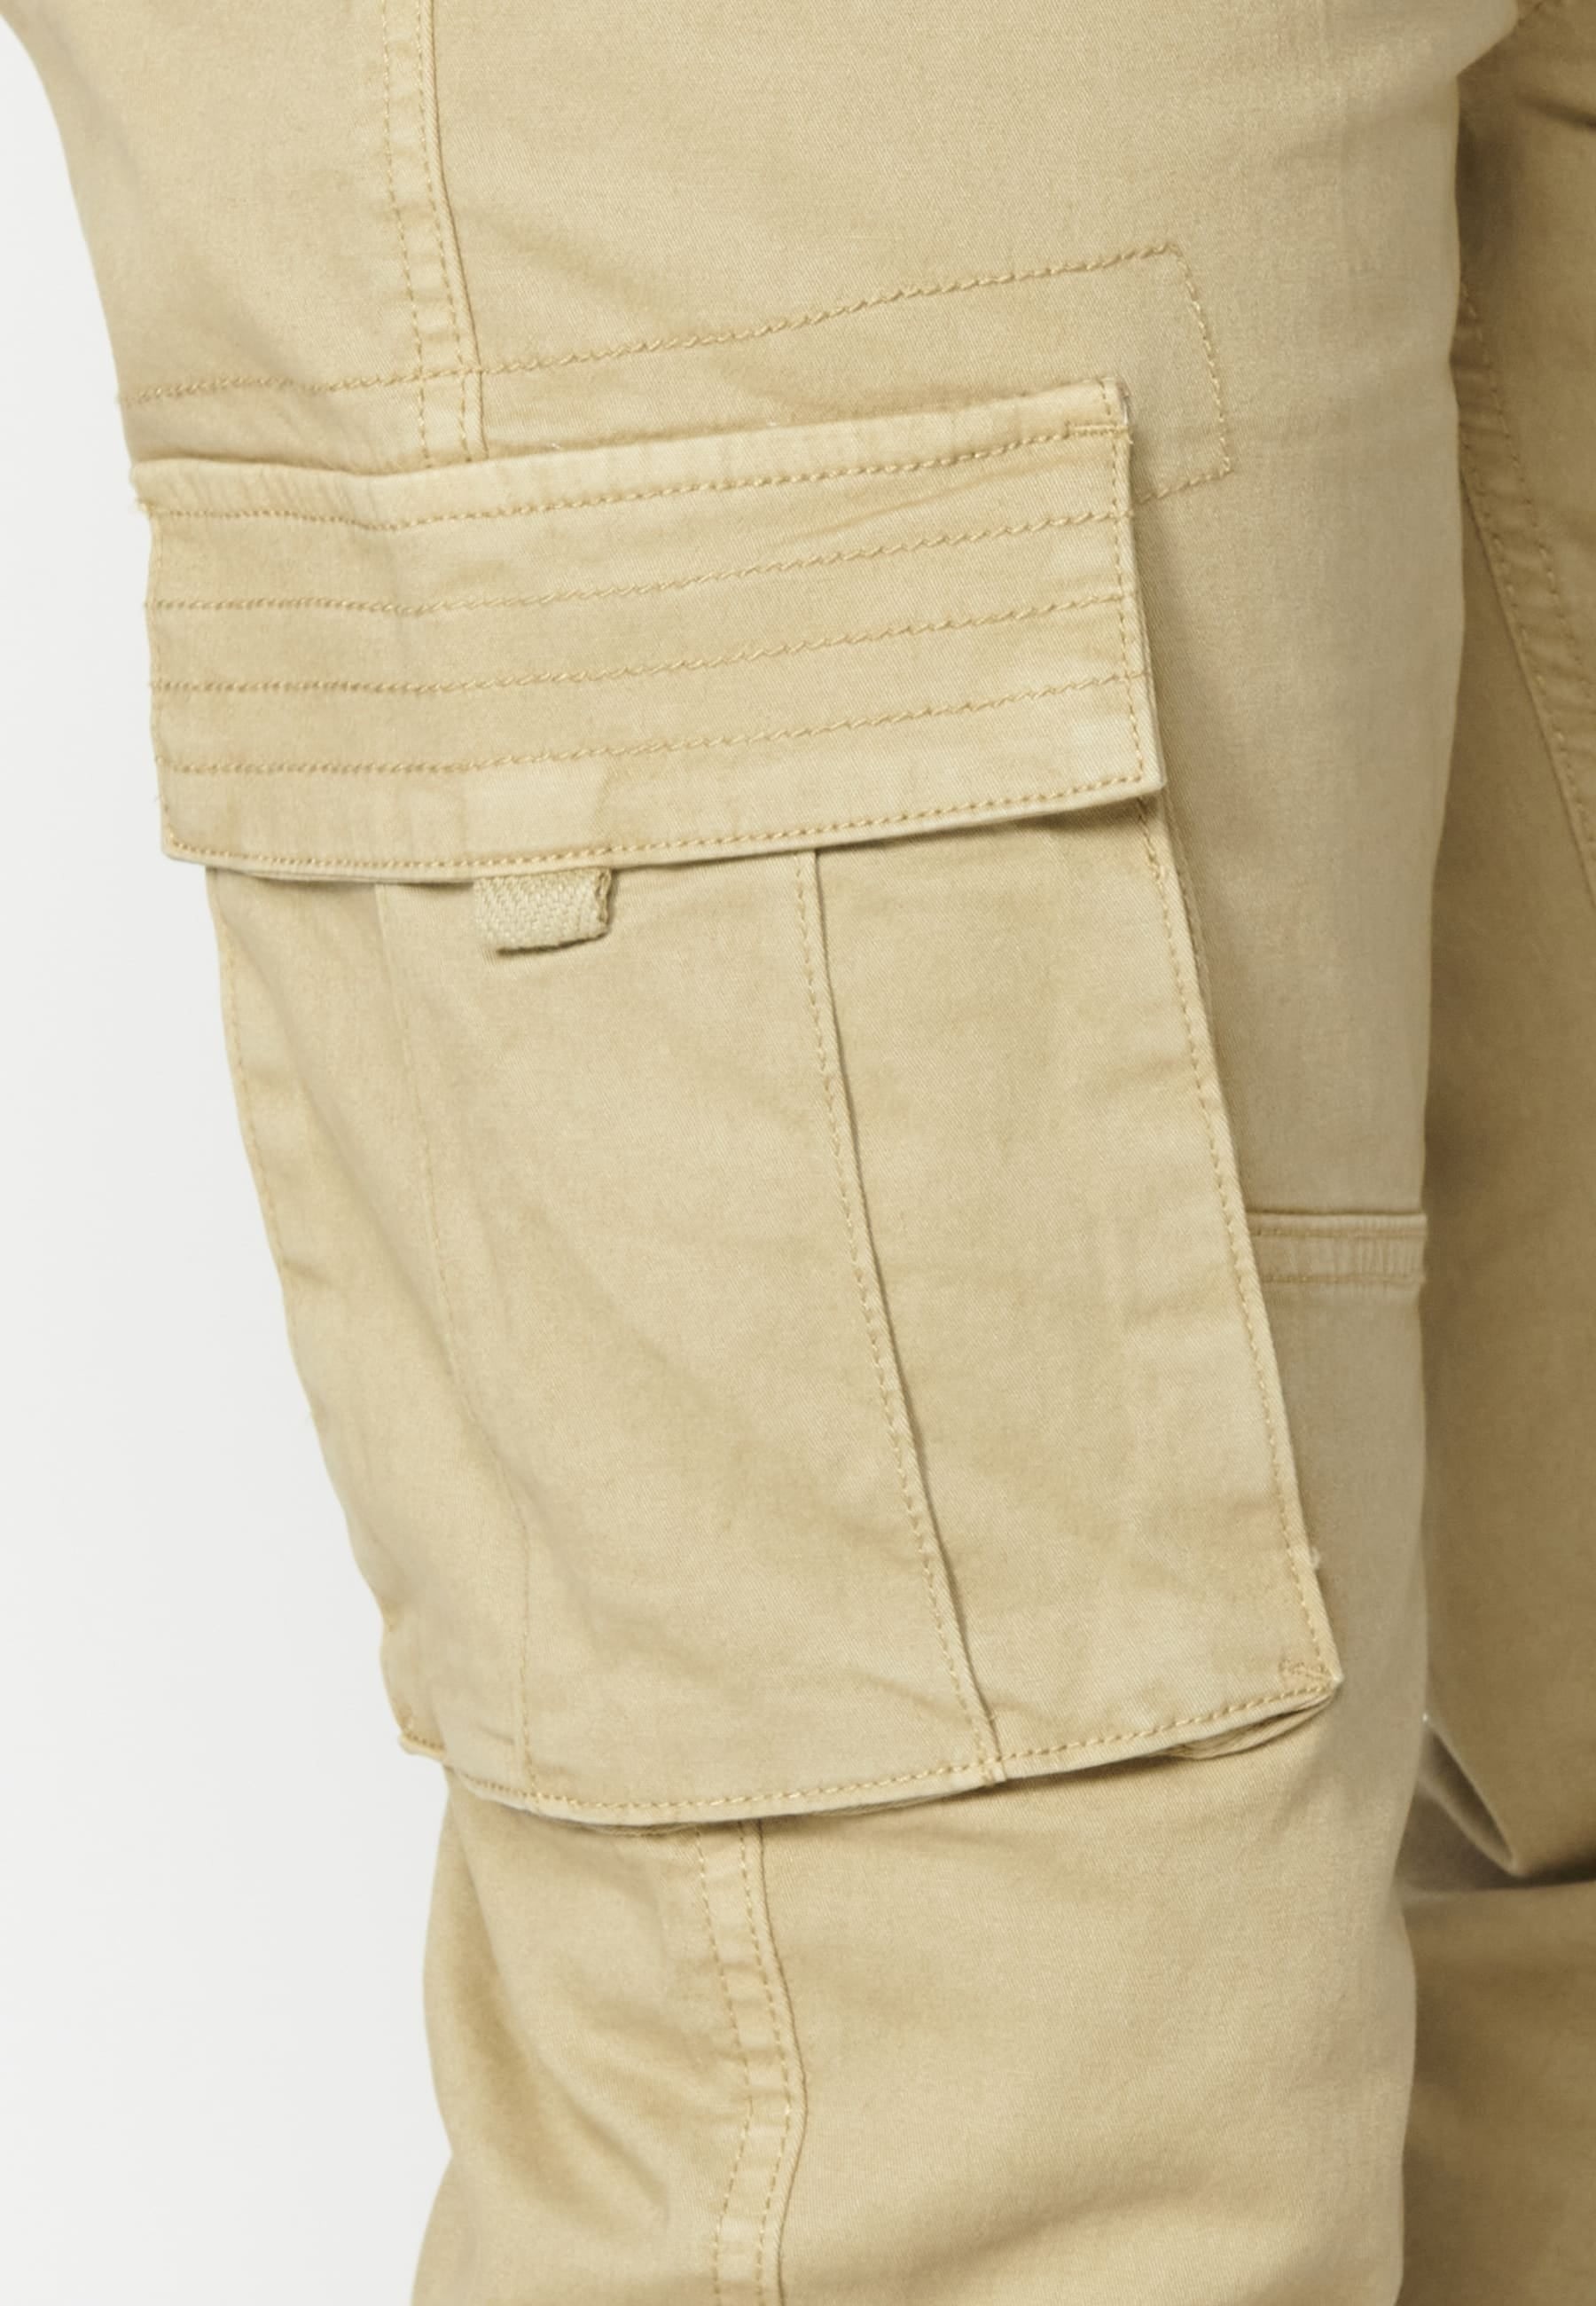 Beige cargo style pants for Men